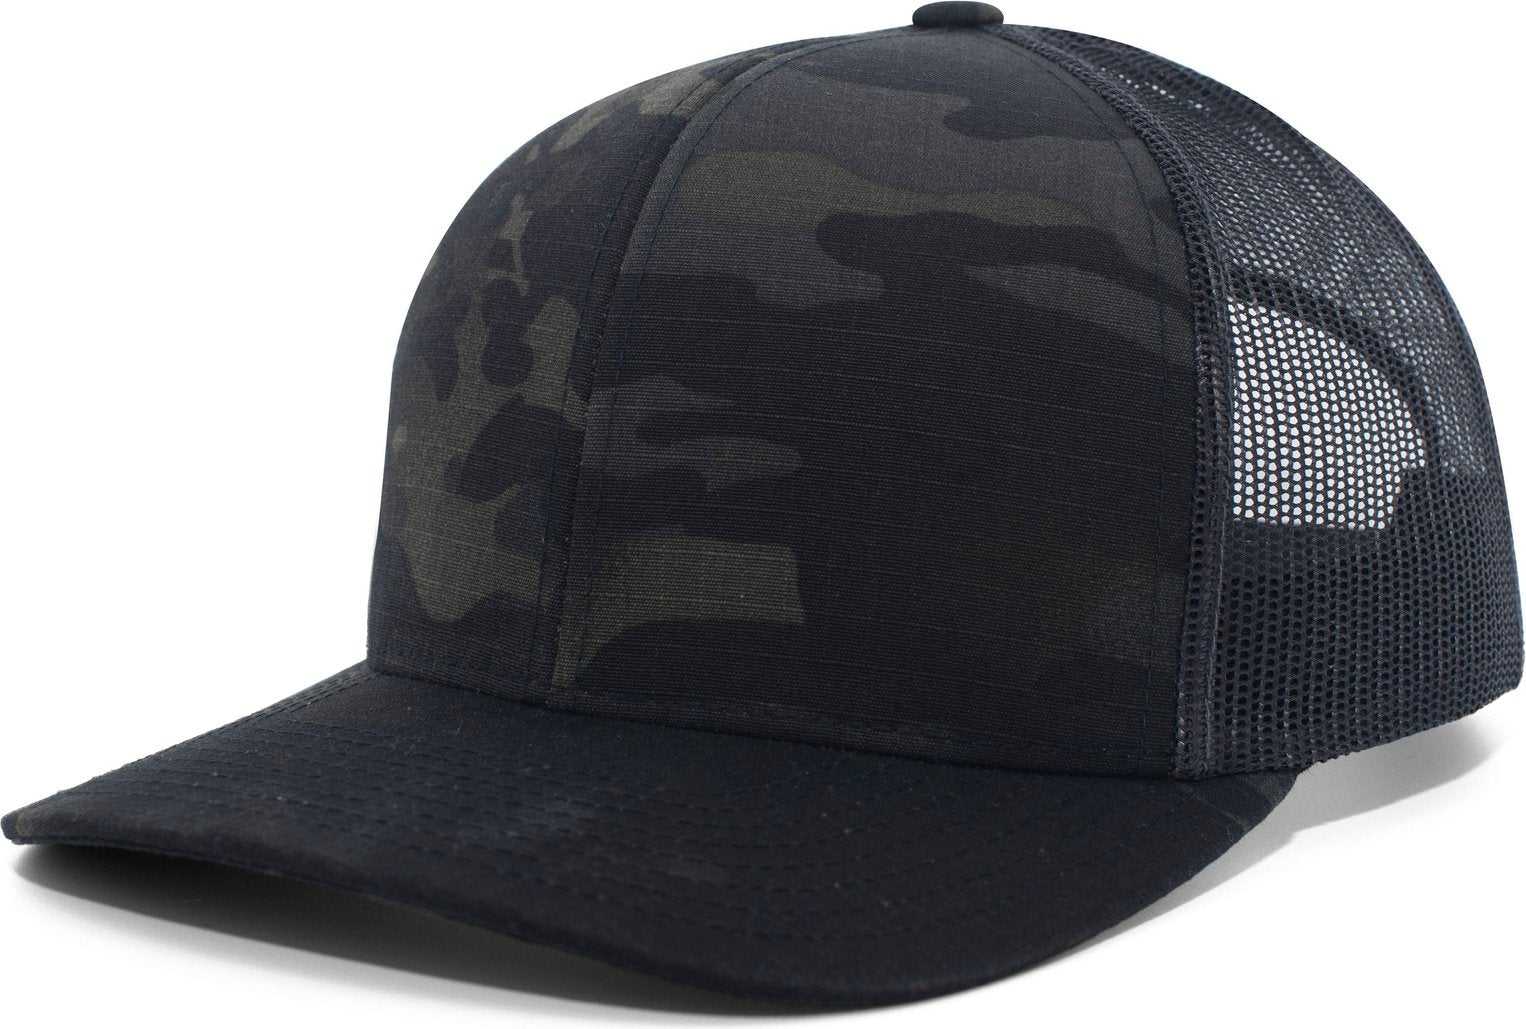 Pacific Headwear M08 MultiCam Snapback Trucker Cap - Multicam Black Black - HIT a Double